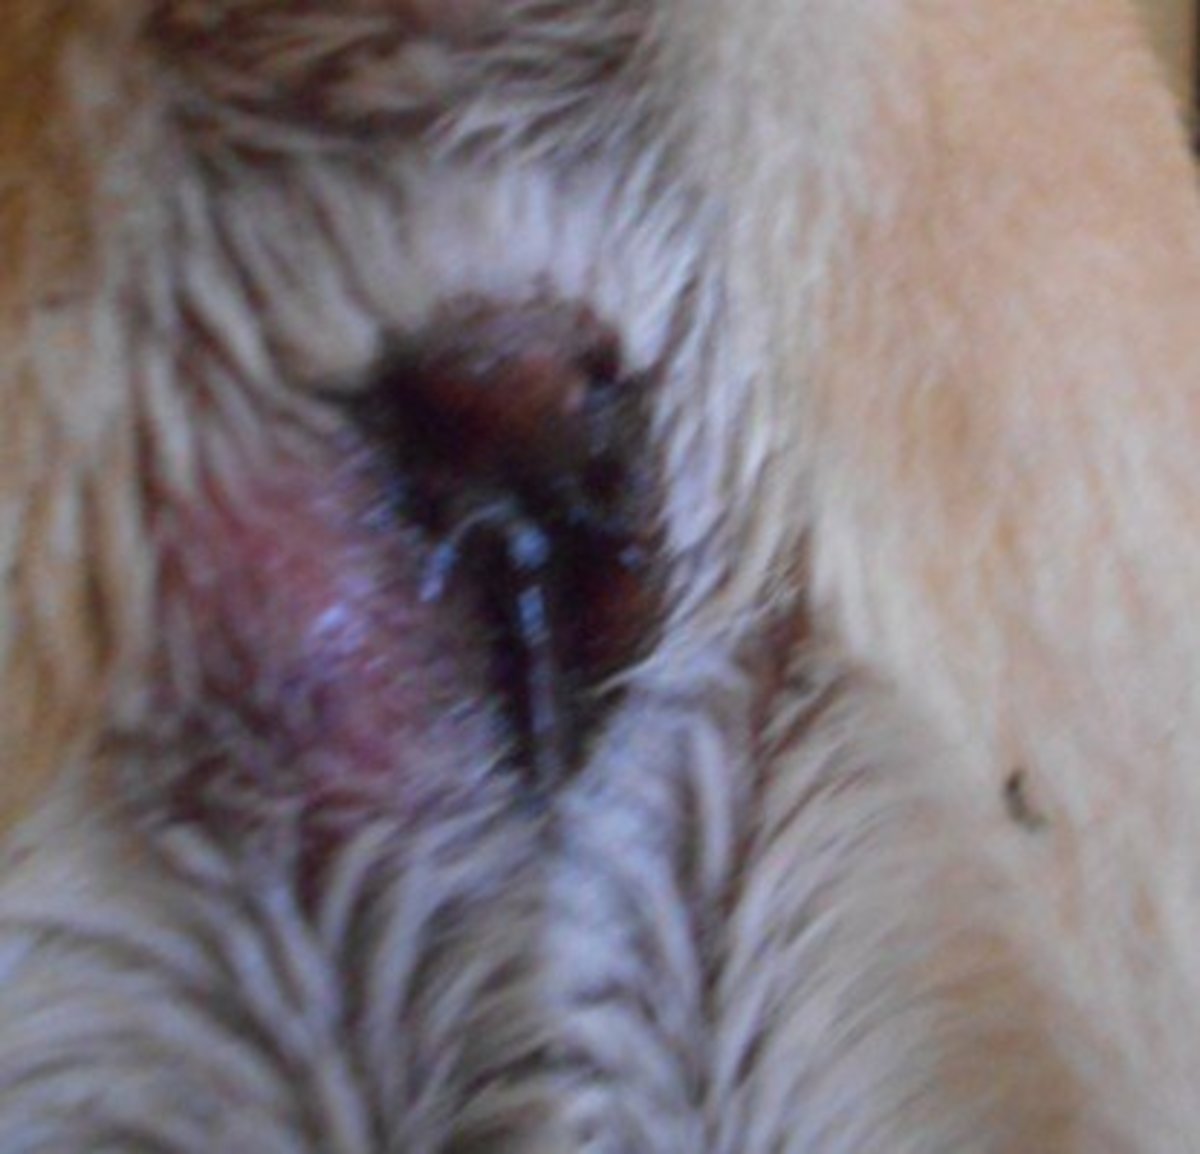 Anus hole near pimple What Causes